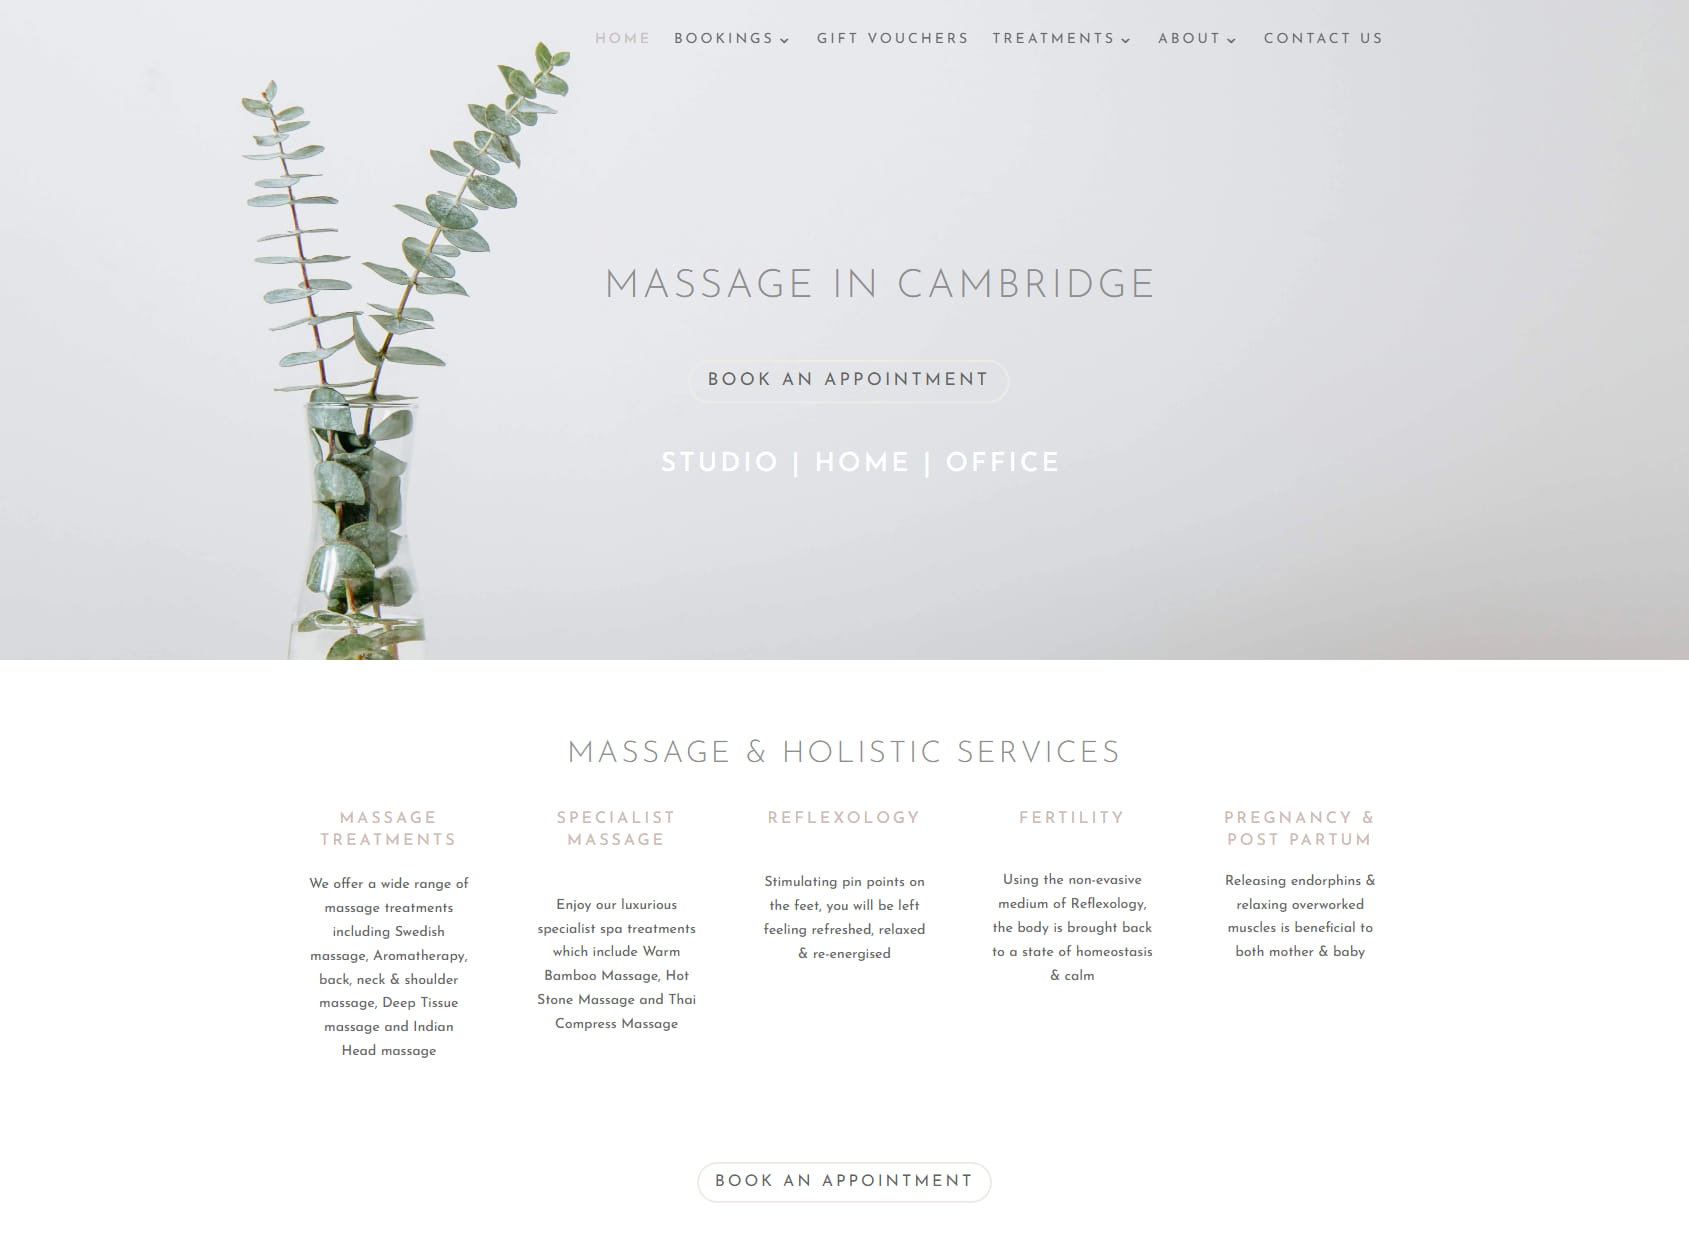 The Cambridge Massage Company